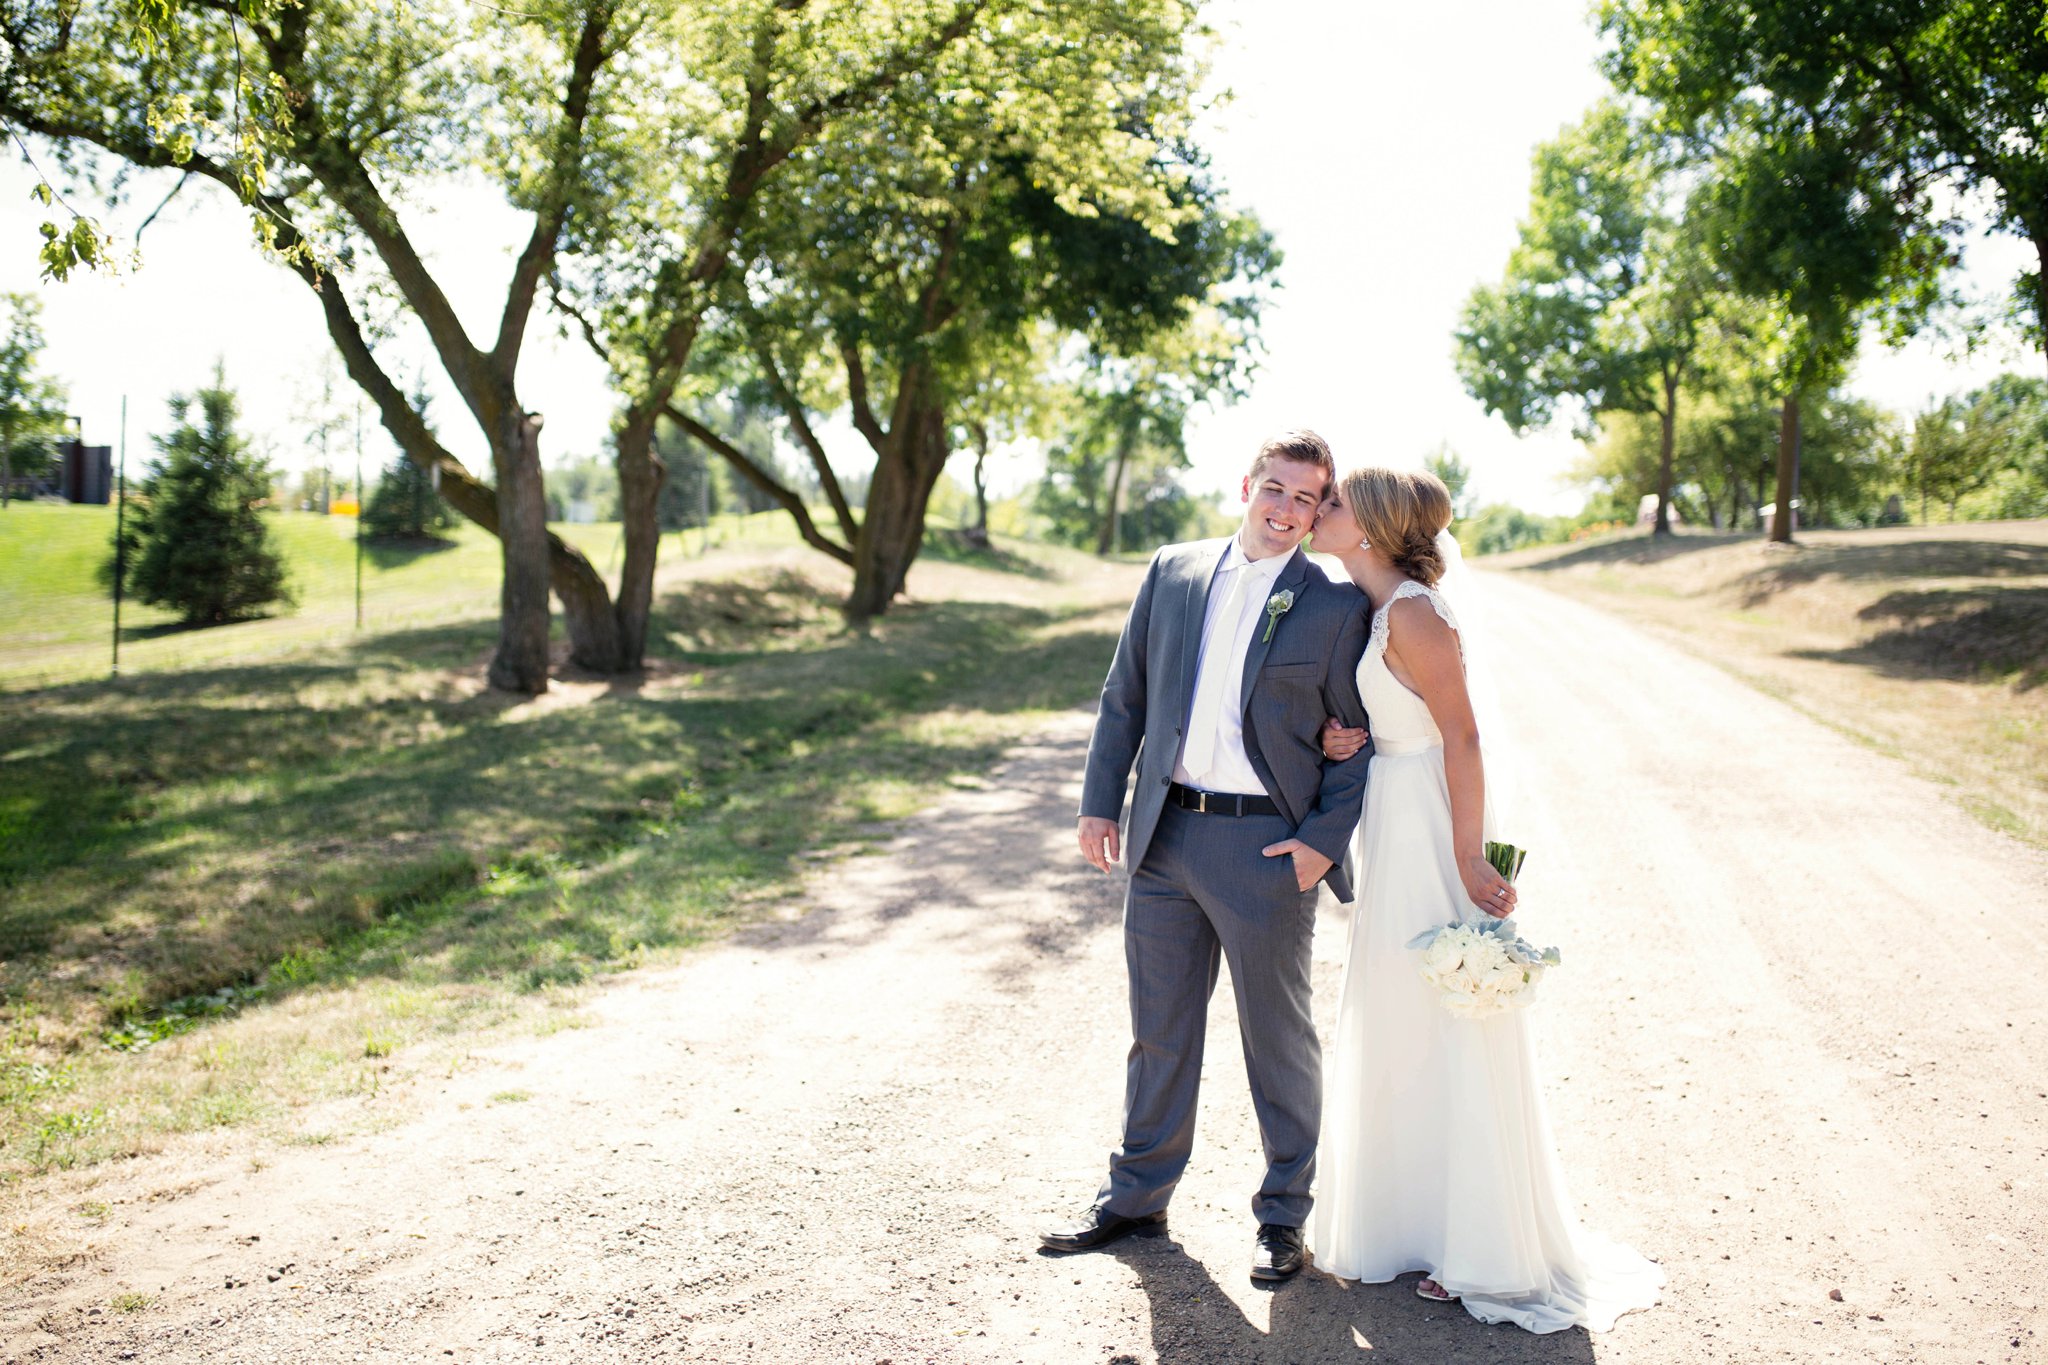 Sioux Falls Wedding Photos | Destination Photographer | Felicia The Photographer | Mary Jo Wegner Arboretum | Bride and Groom | Dirt Road